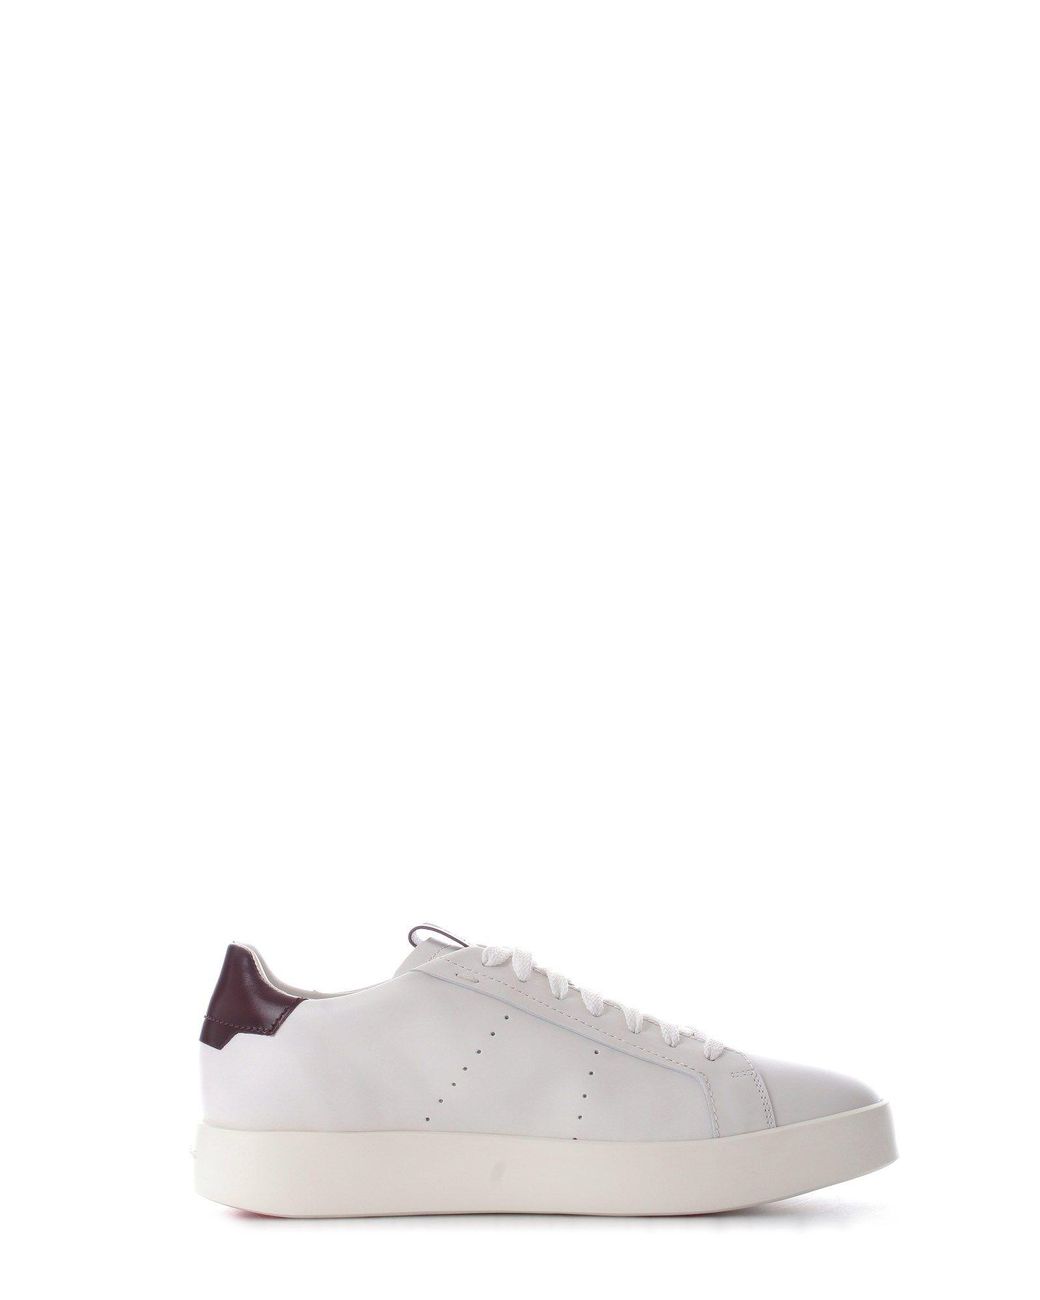 Santoni Leather Sneakers in White for Men - Lyst